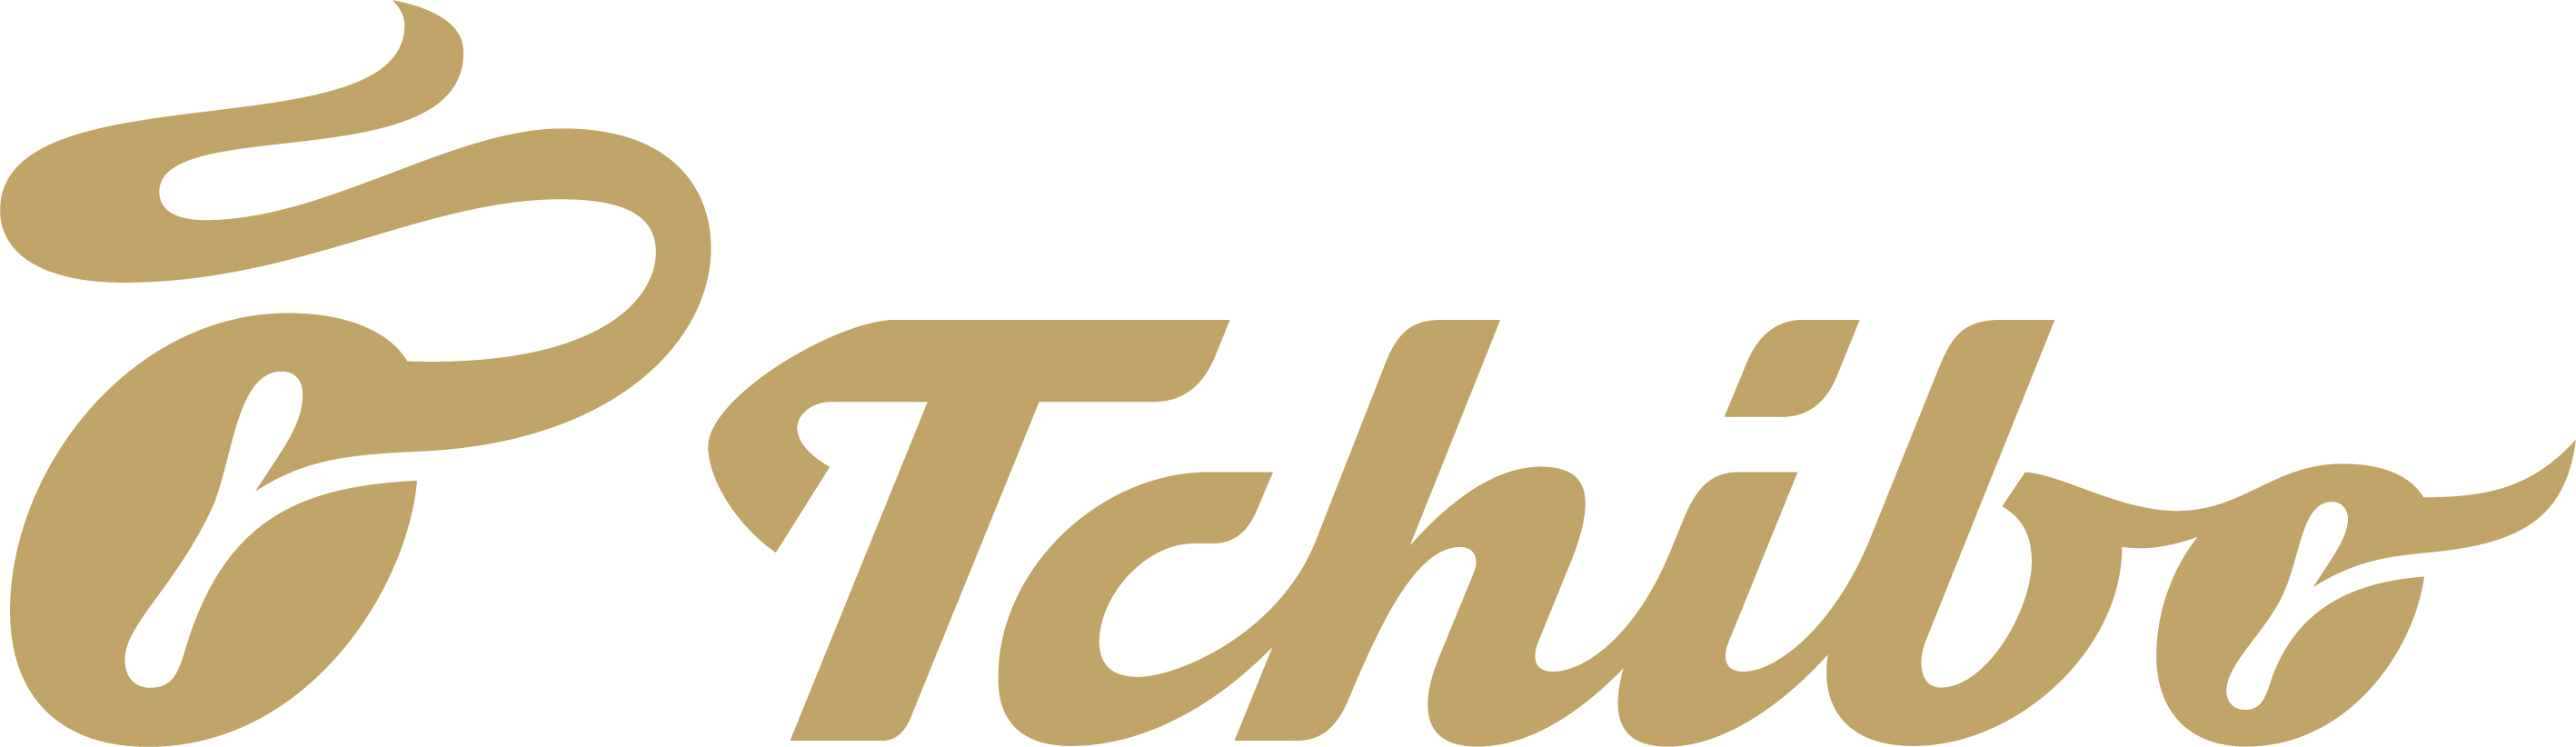 Tchibo Logo hor Gold dark sRGB2